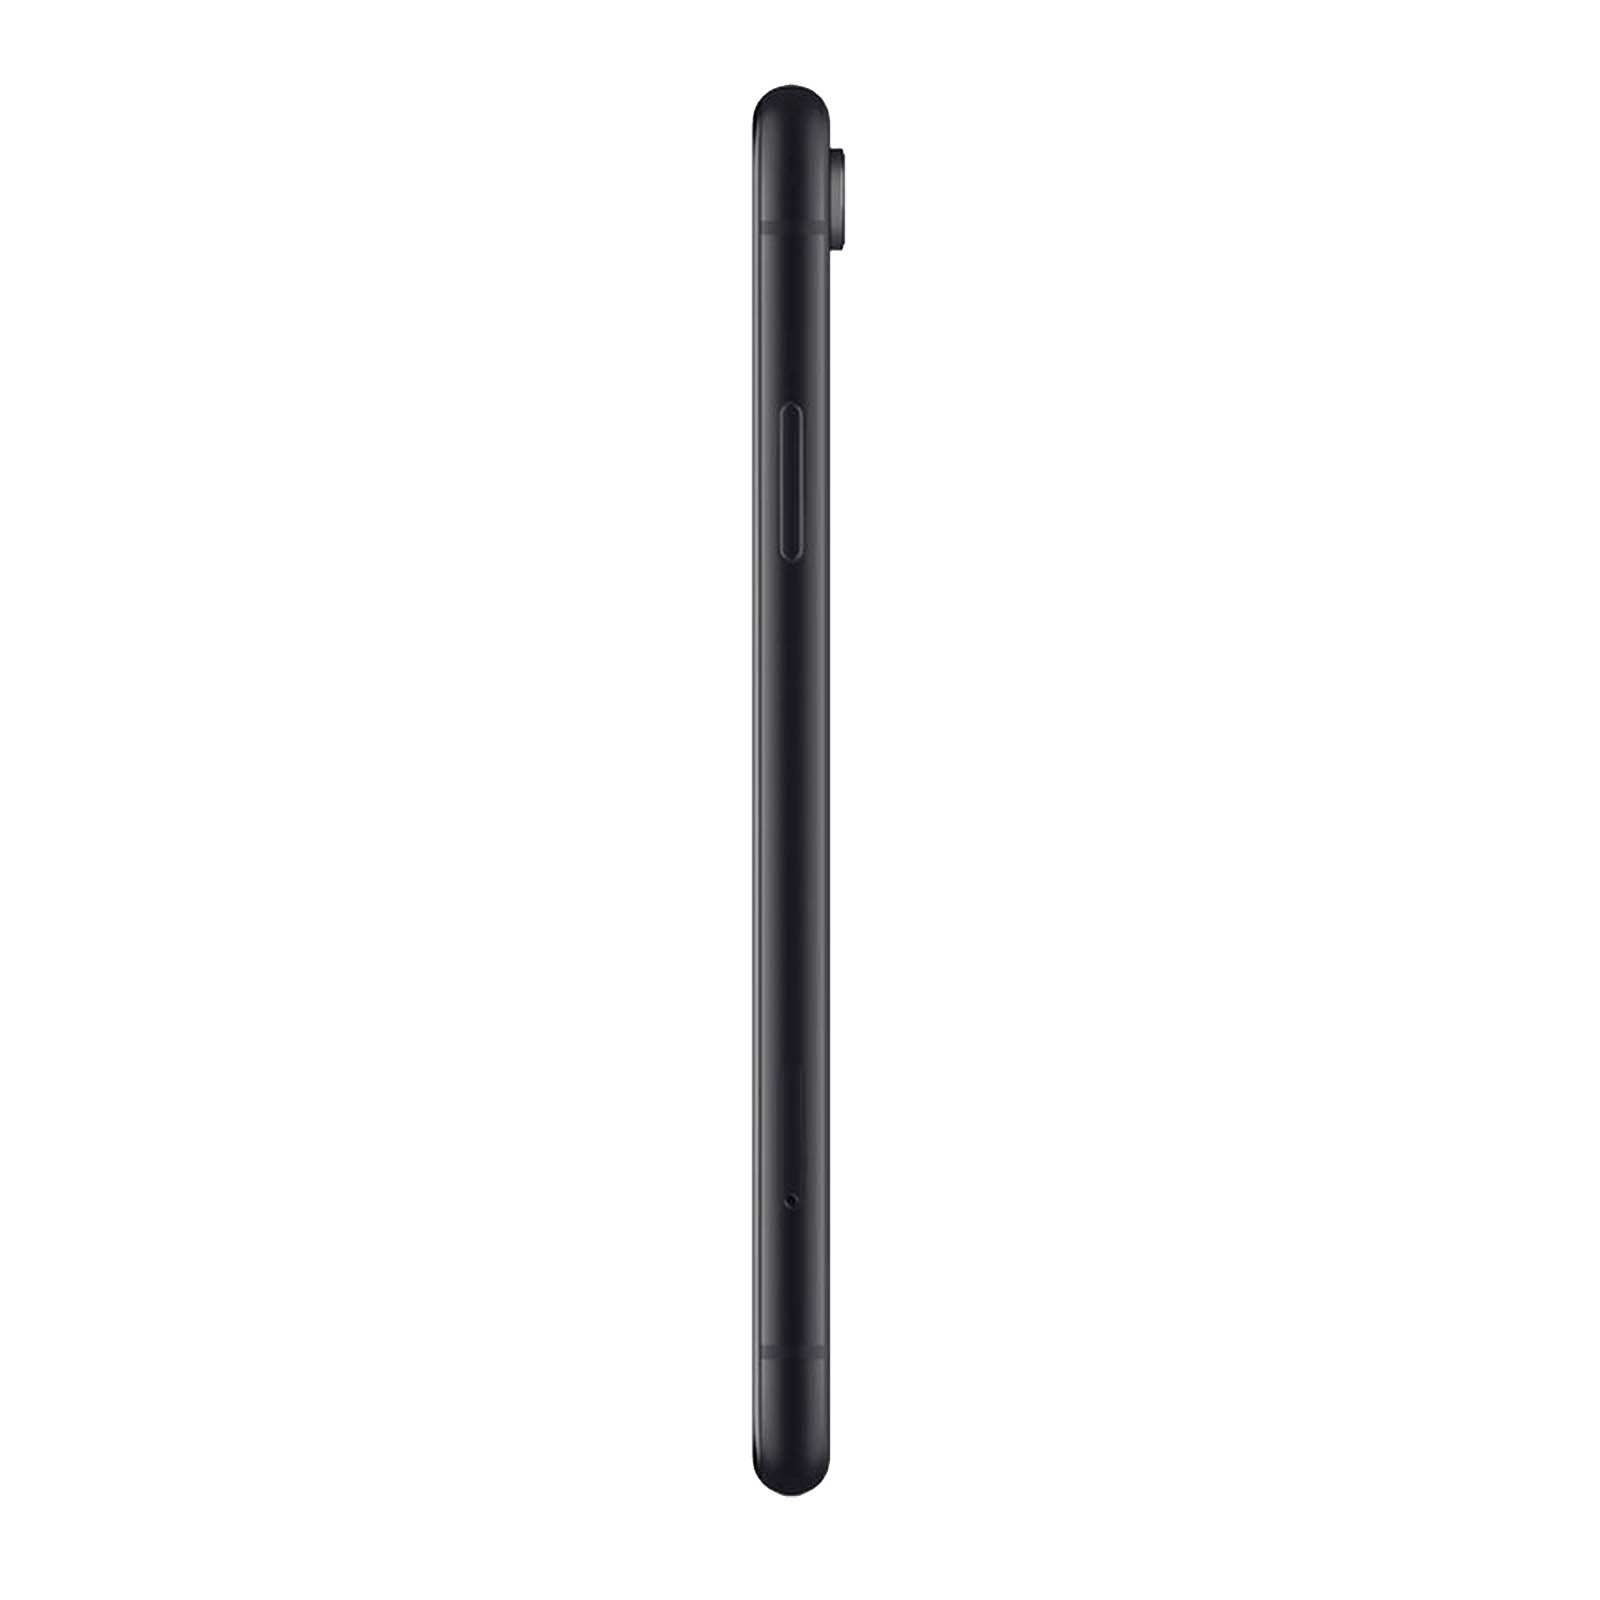 Apple iPhone XR 64GB Black Pristine - Unlocked